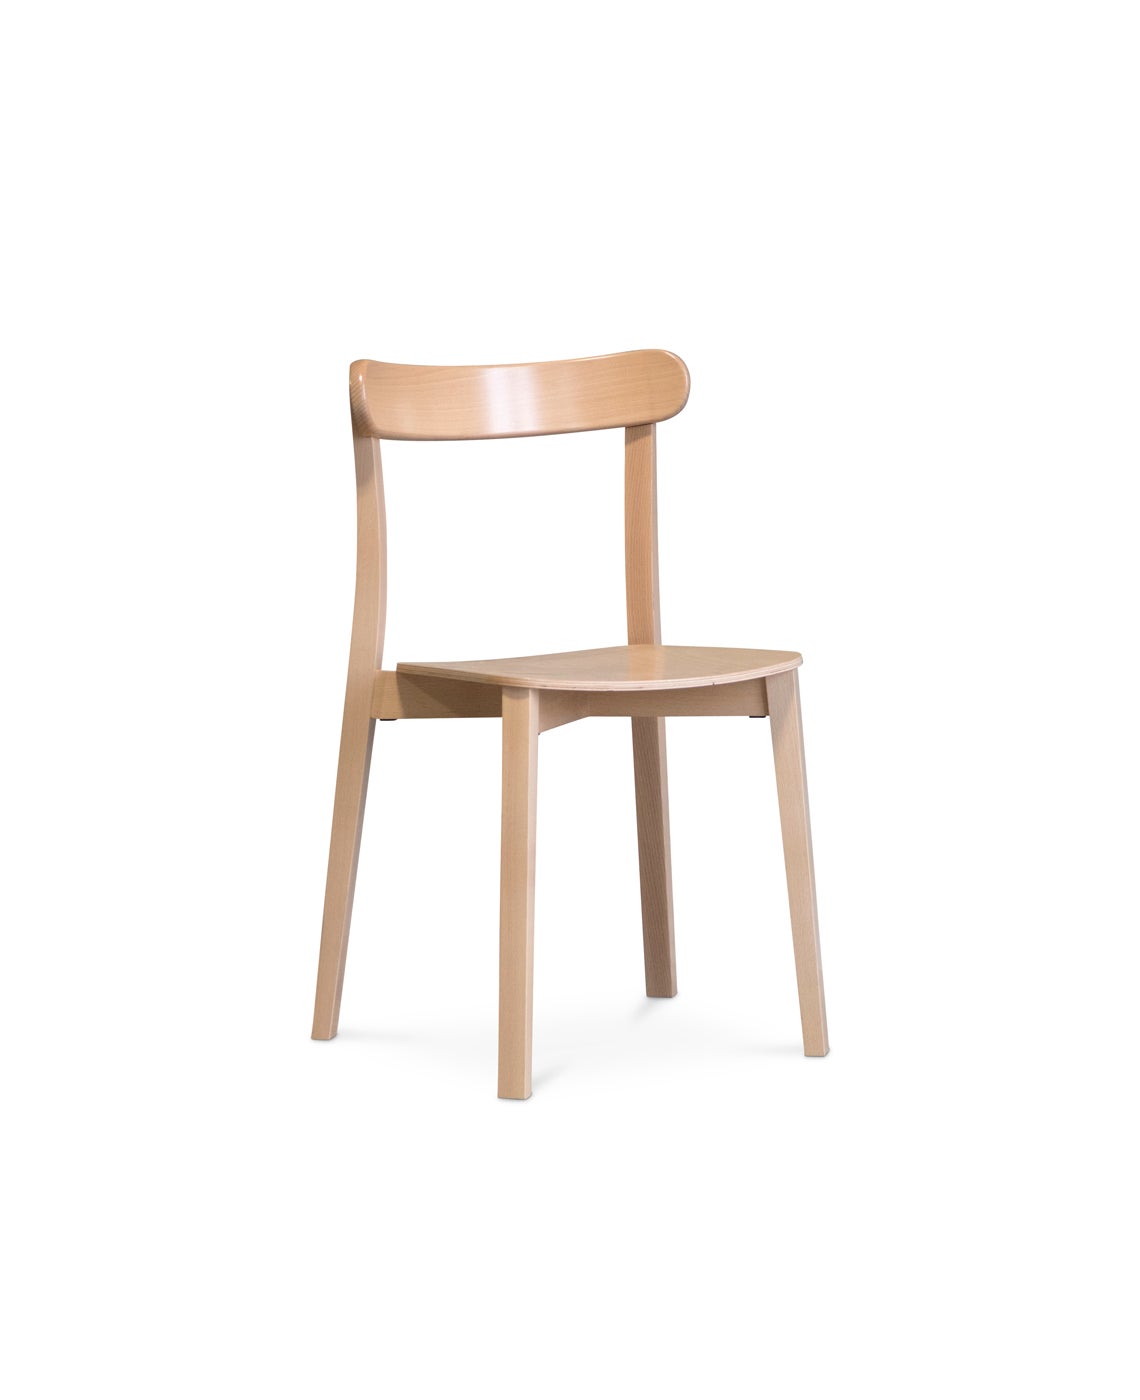 Genuine Bentwood & Modern Timber Chairs - Cintesi